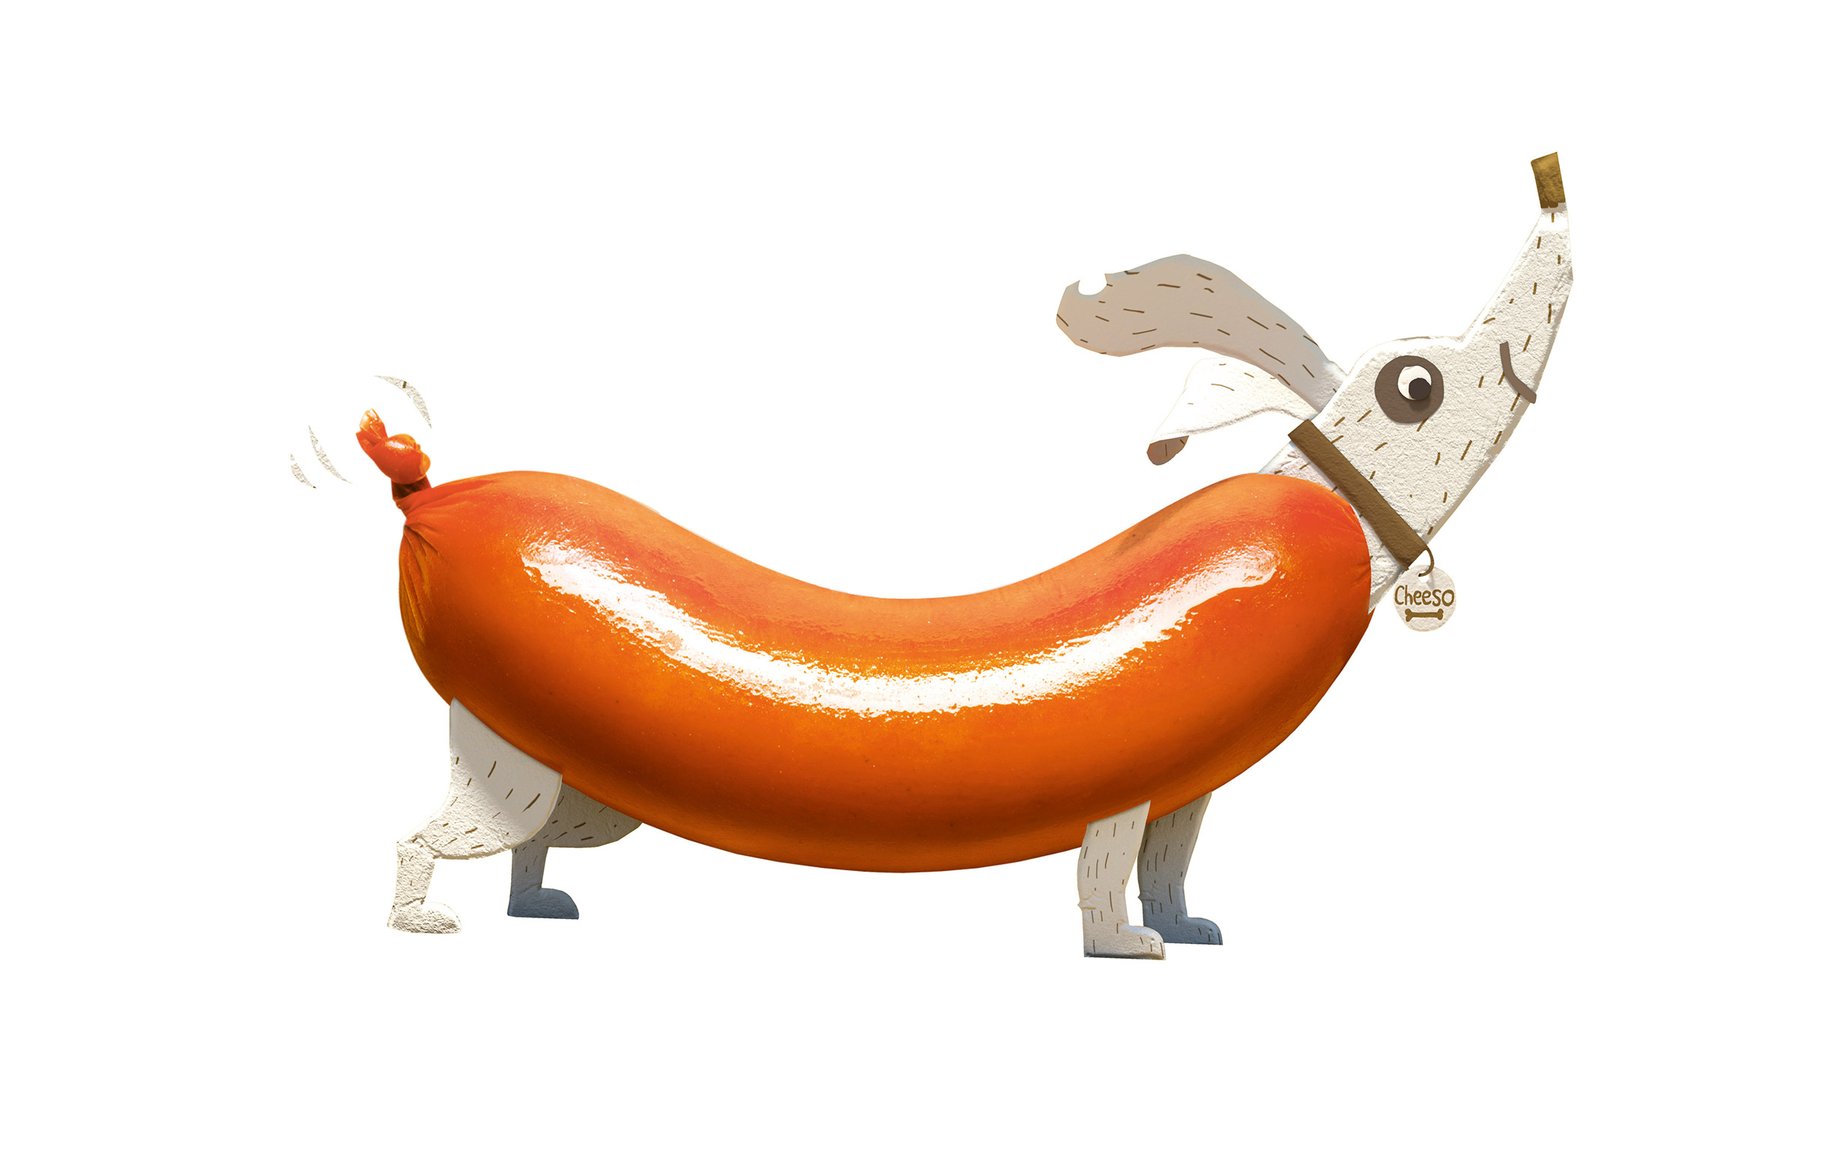 Hellers cocktail sausage illustration